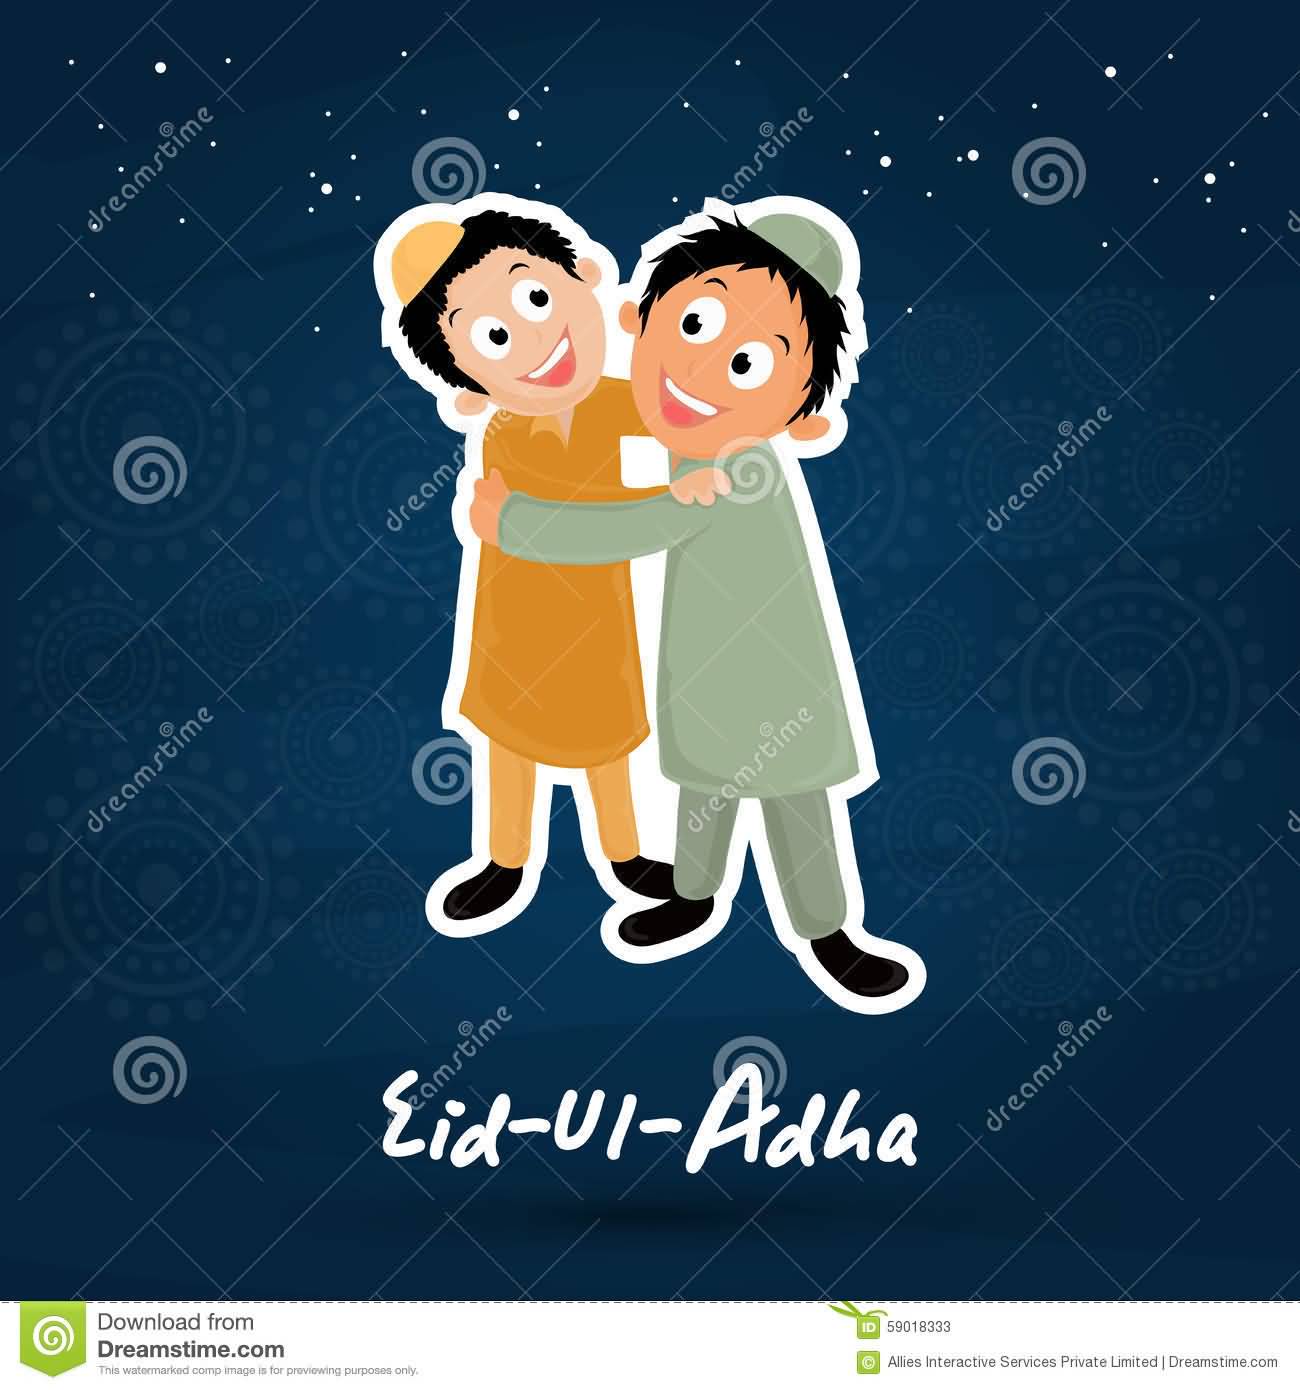 Eid al-Adha Greetings Muslim Brothers Hugging Each Other Clipart Image